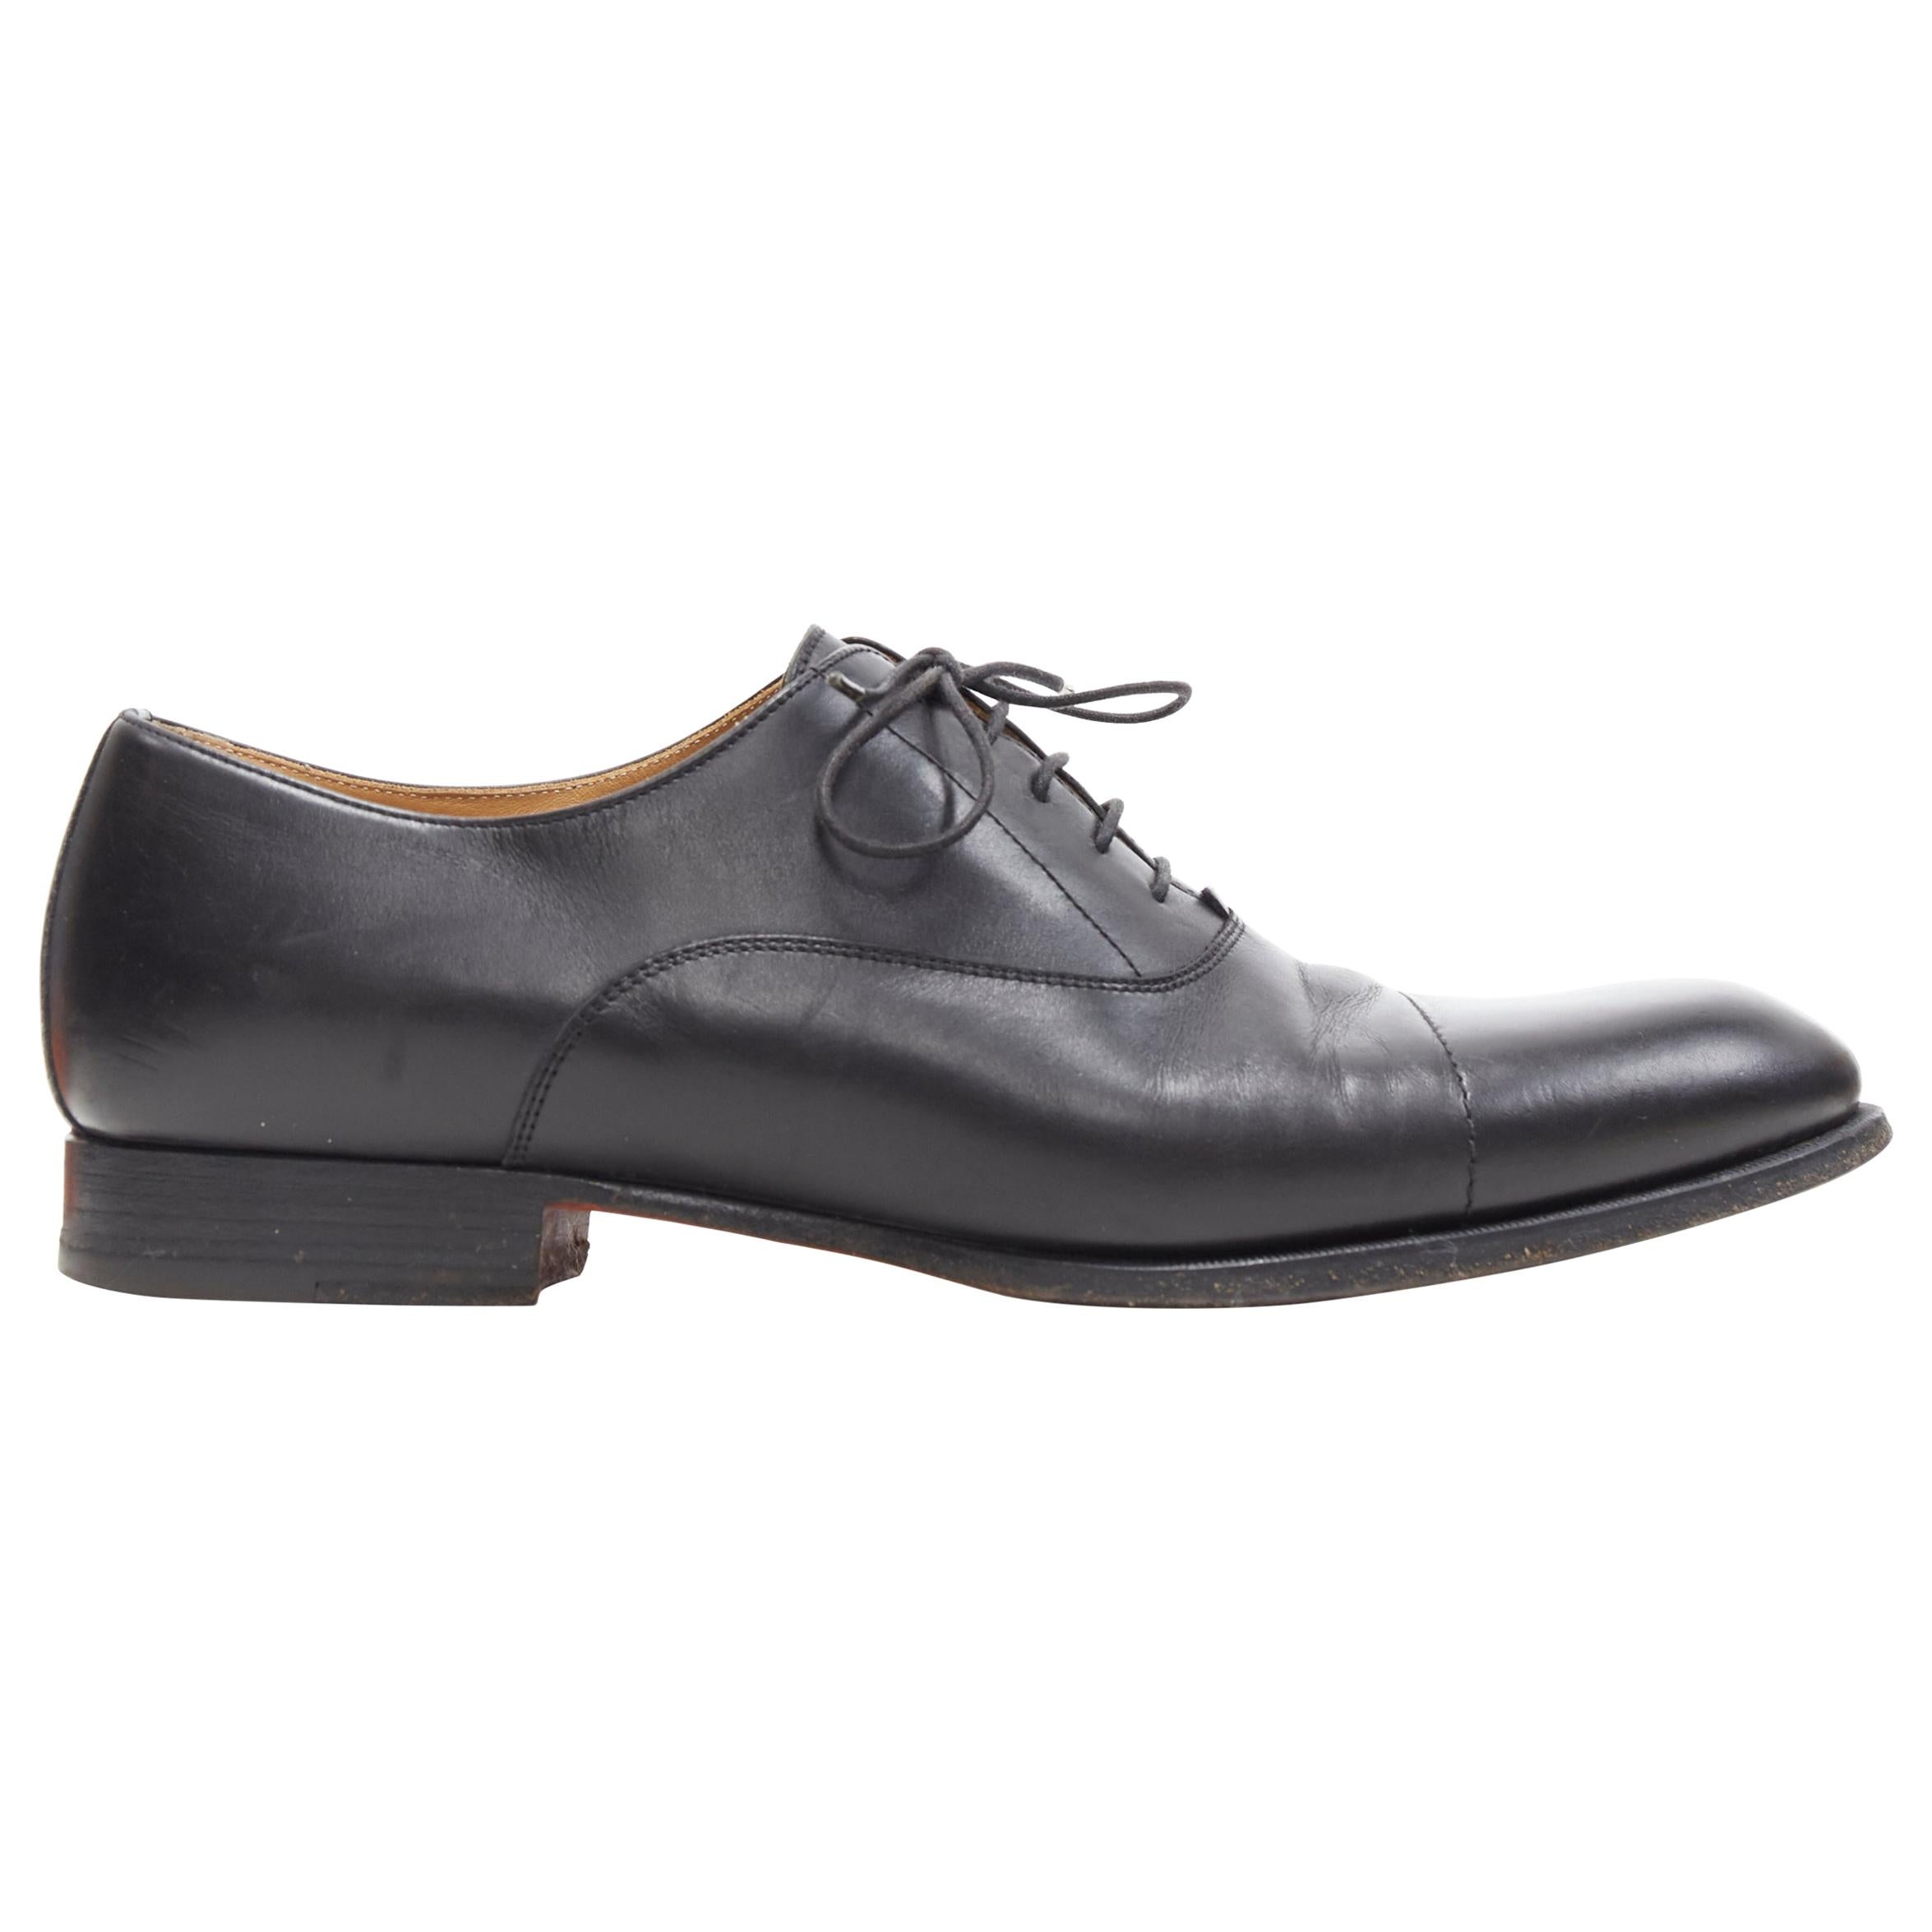 HERMES black calf leather 5-eyelet lace up derby oxford dress shoes EU43.5